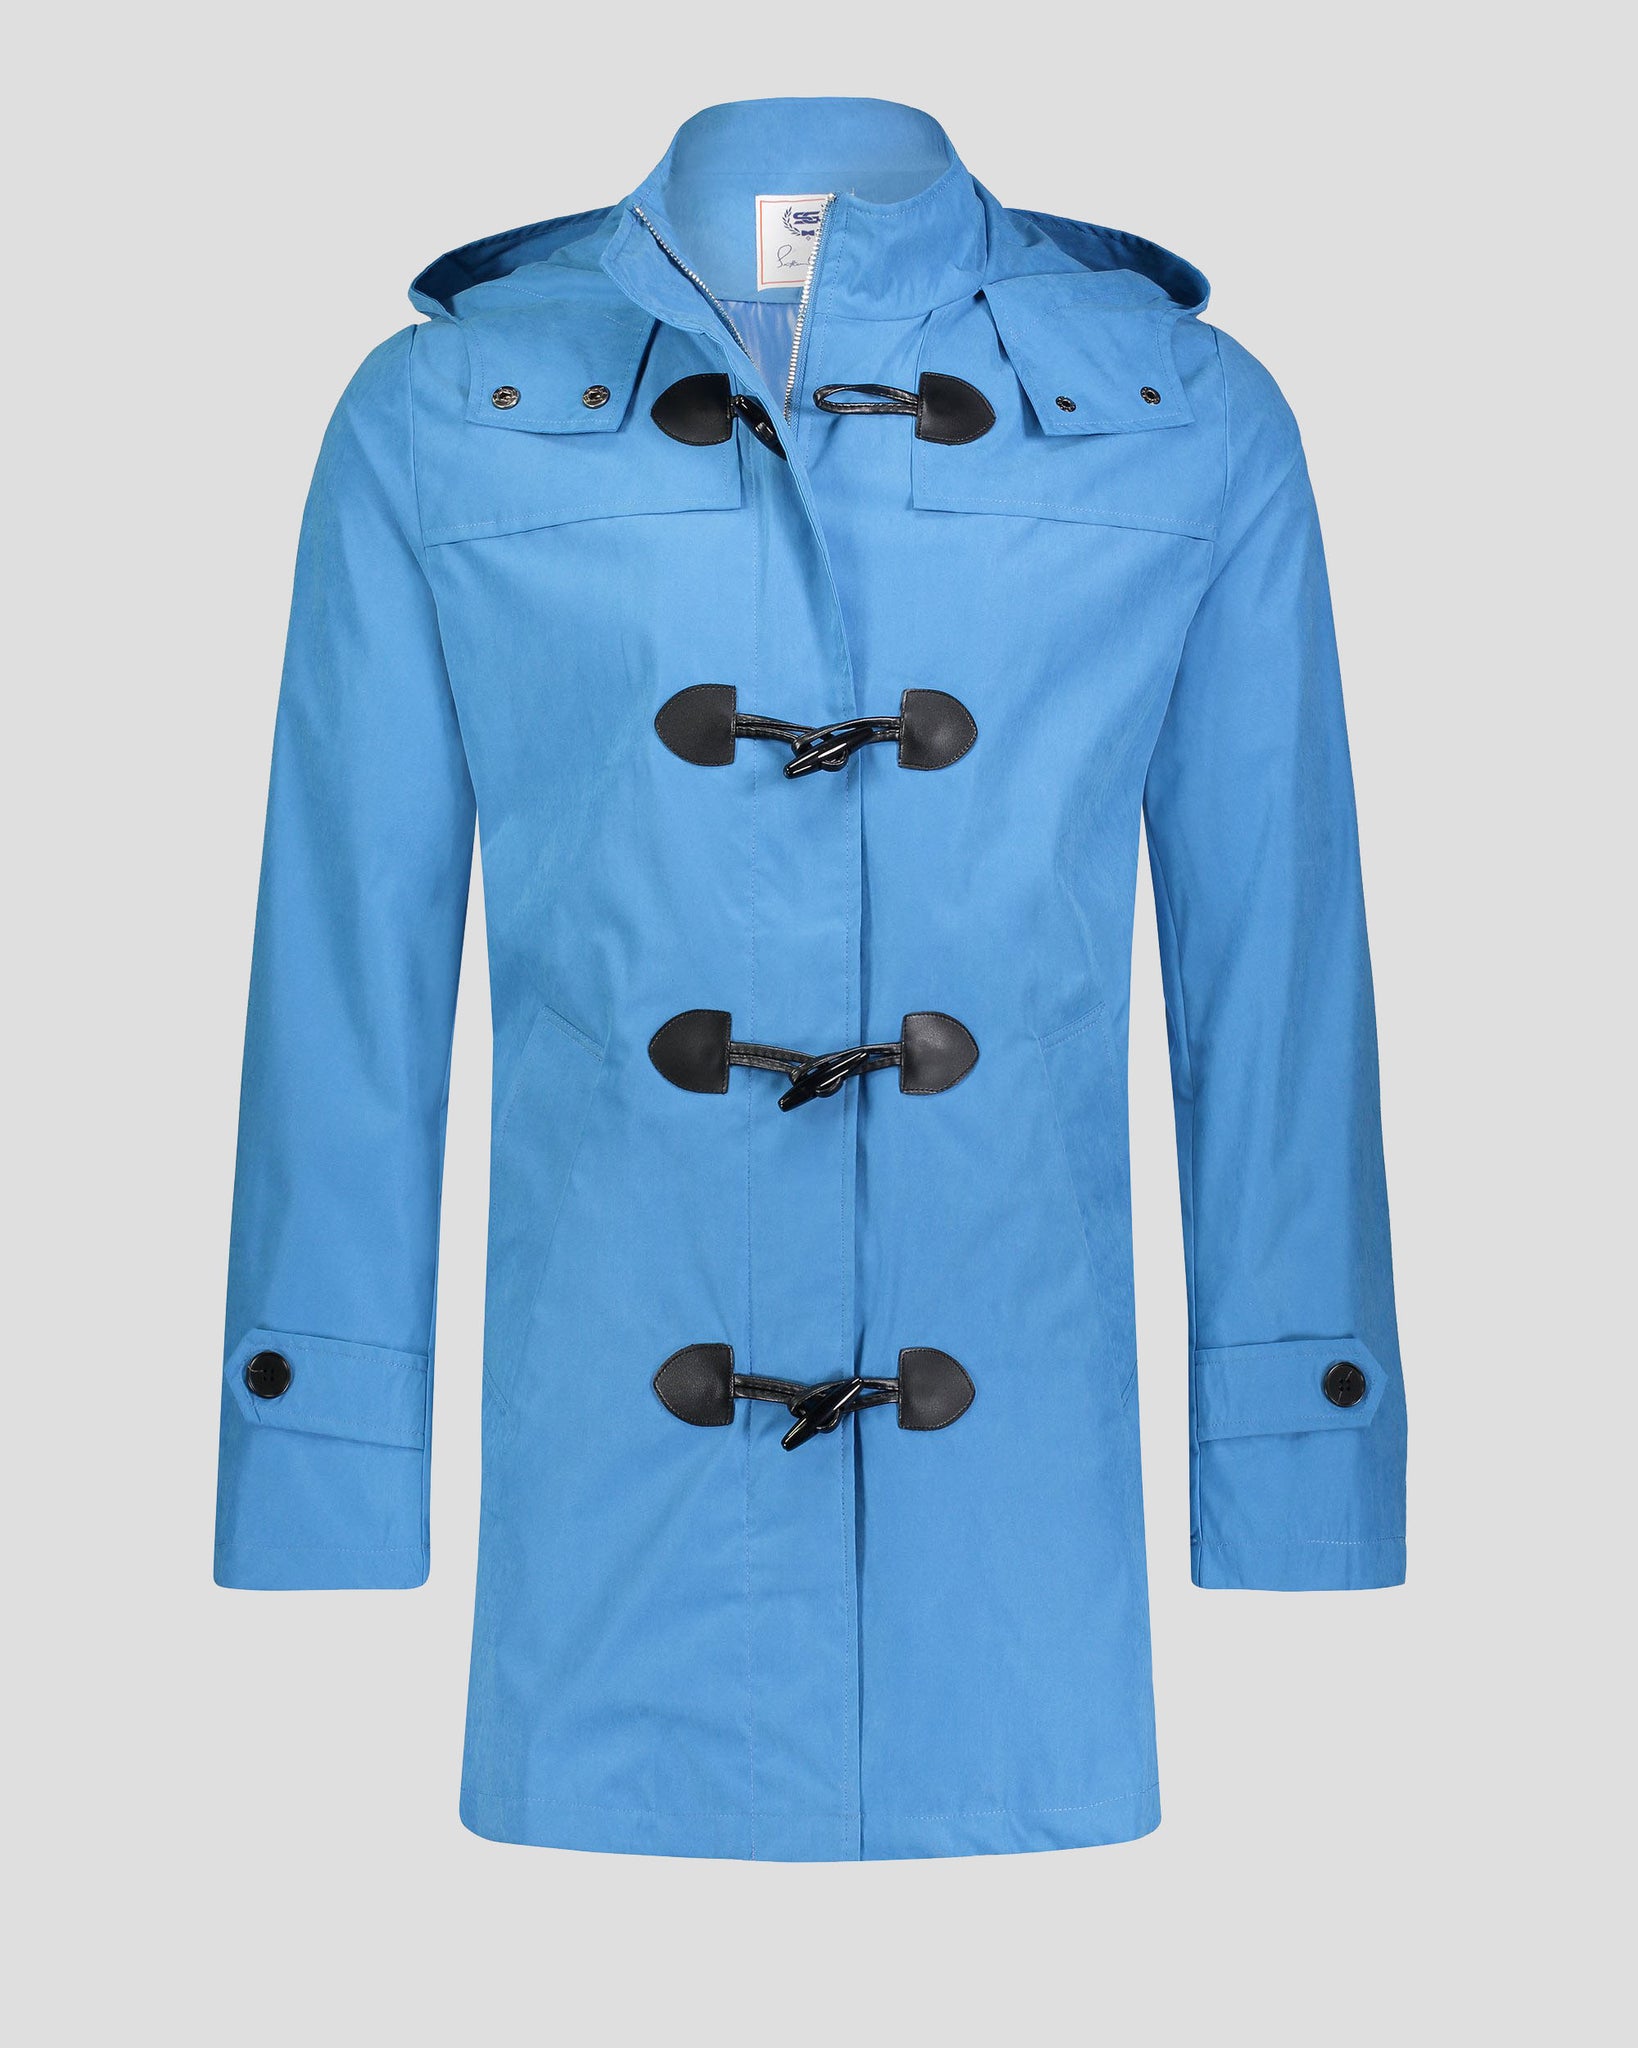 Southern Gents Toggle Raincoat - Blue